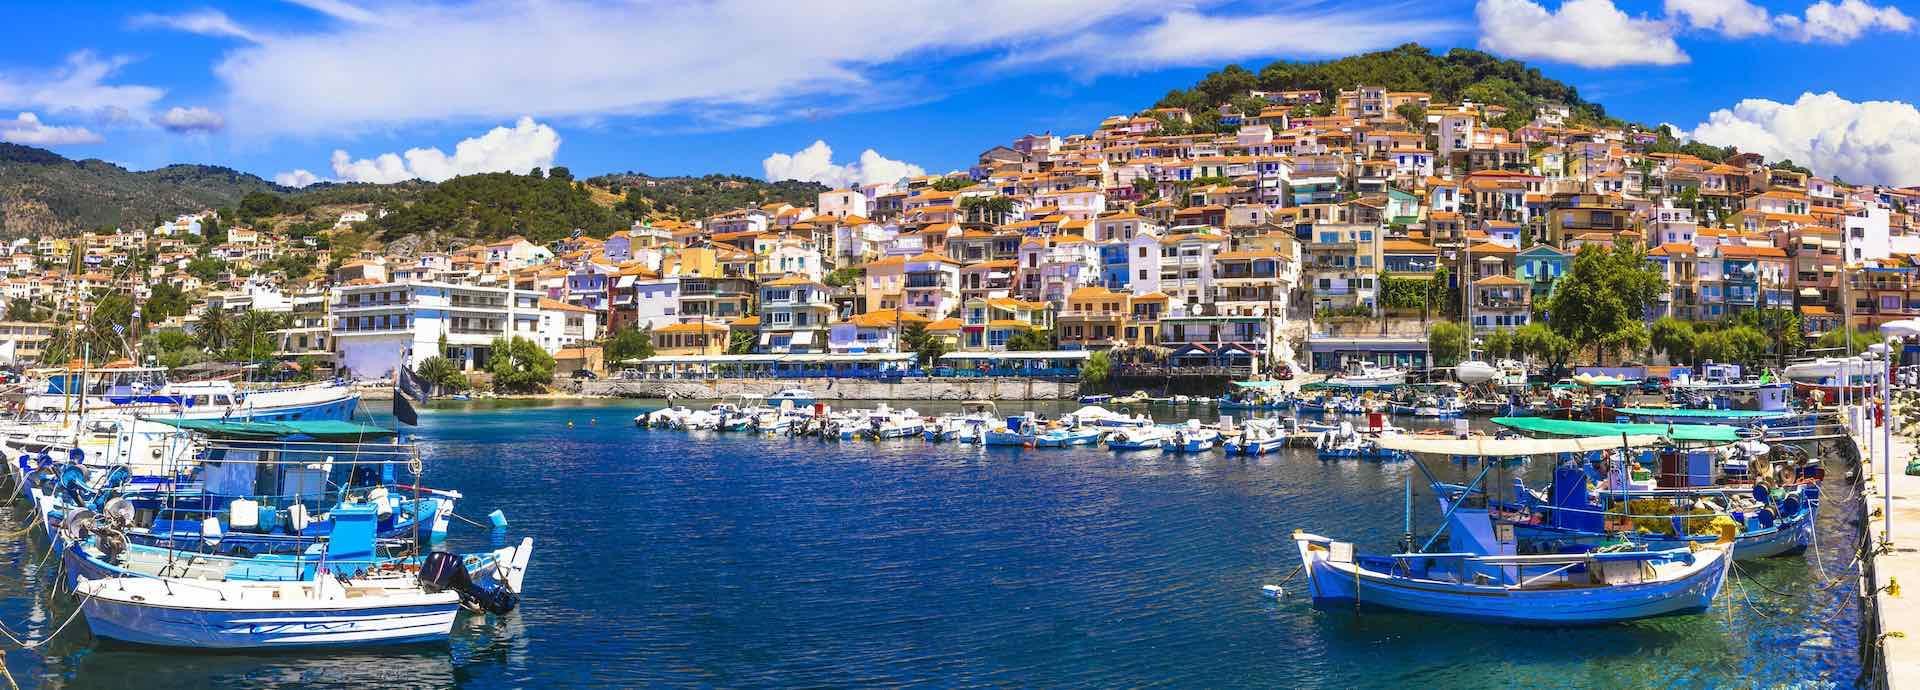 Increasing renewable energy penetration on a Mediterranean island